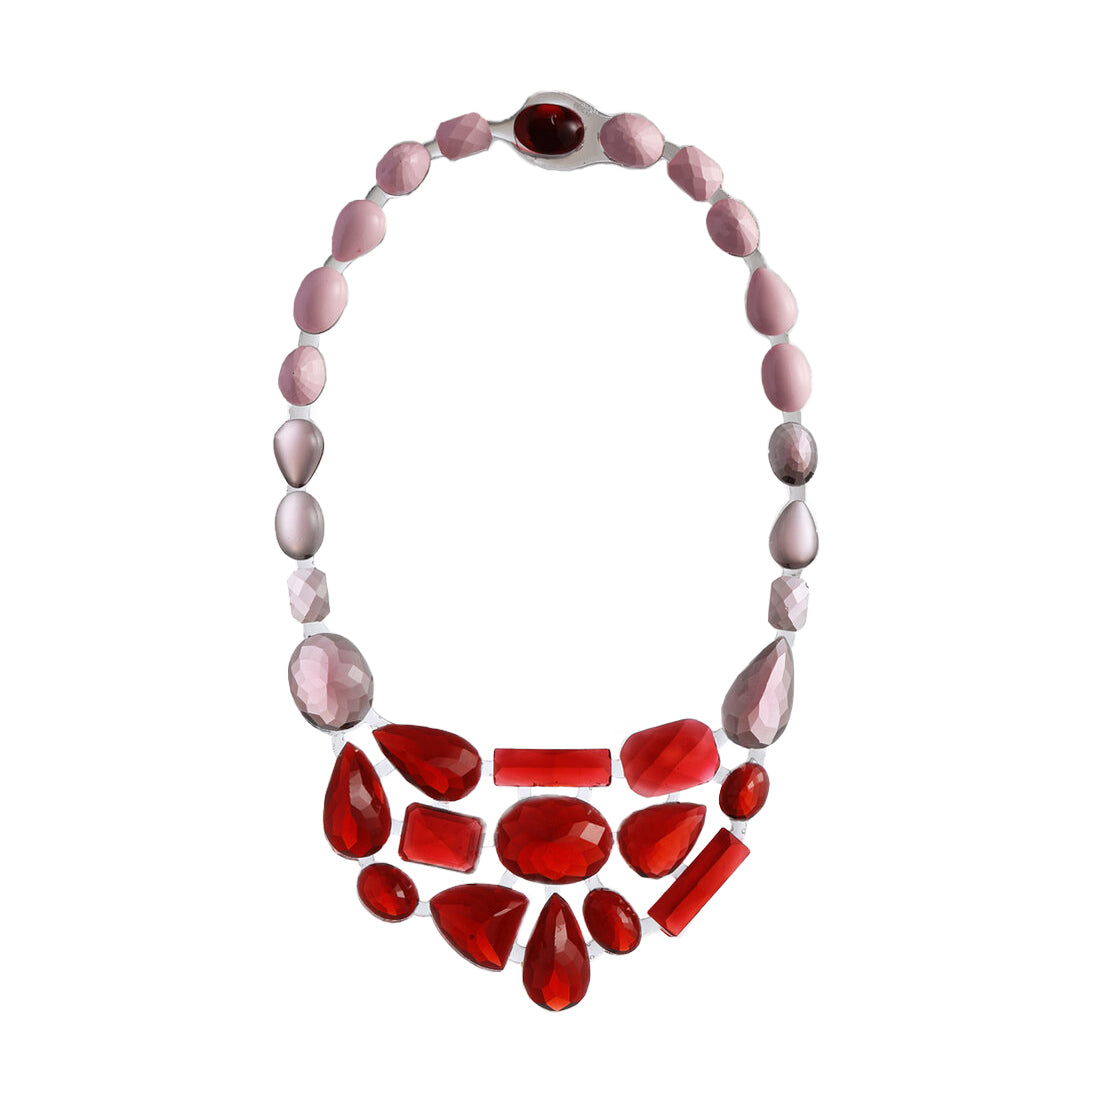 Stones Collier Necklace Red│Halsketting Corsari Jewels rood│foto voorkant met witte achtergrond